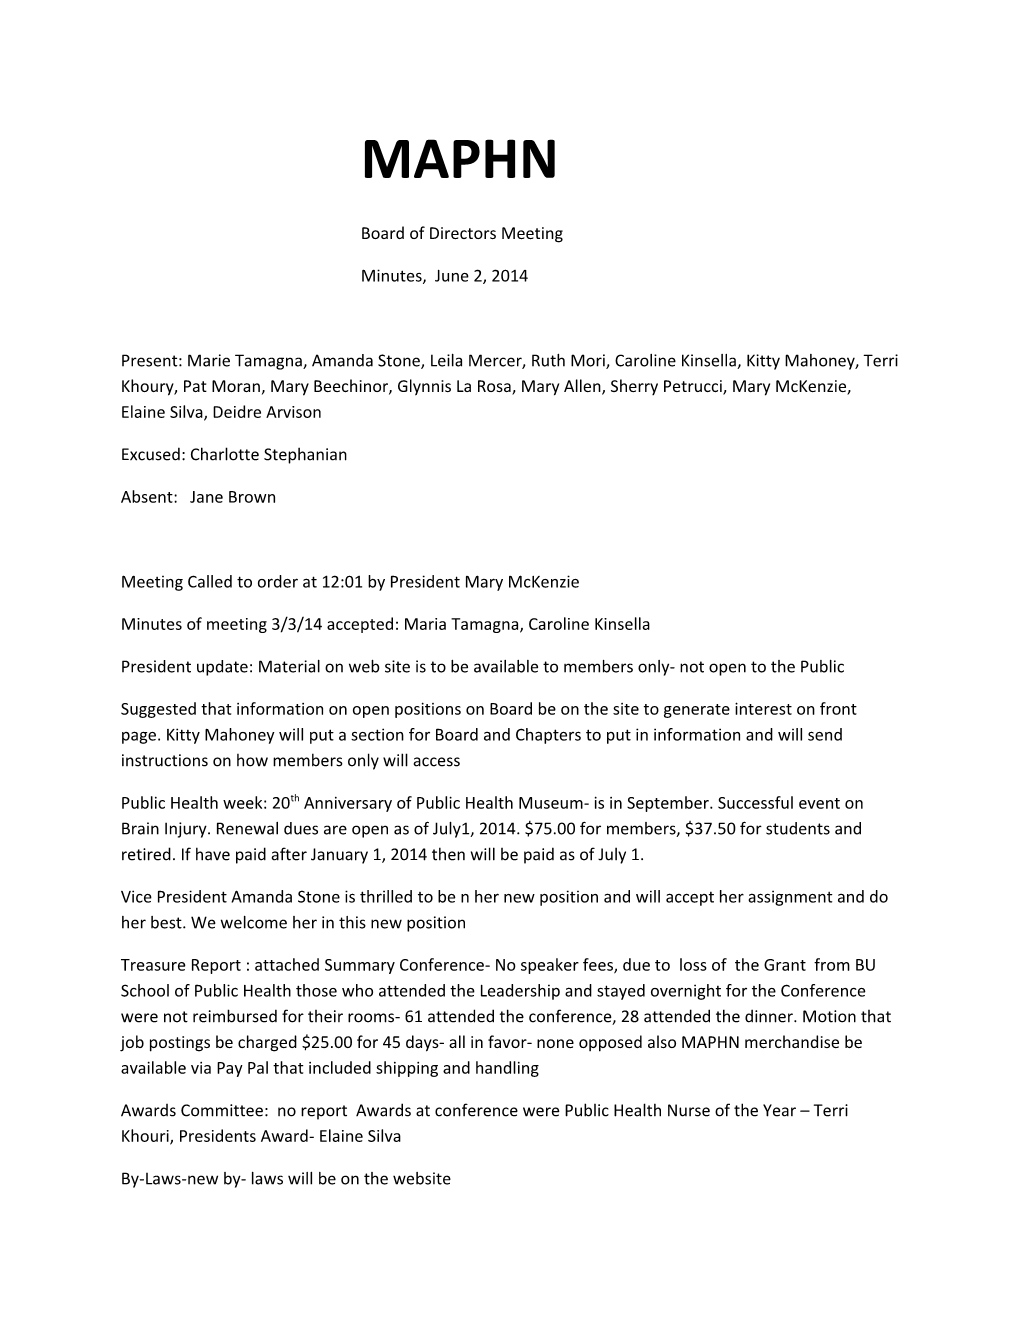 Board of Directors- MAPHN June 2, 2014